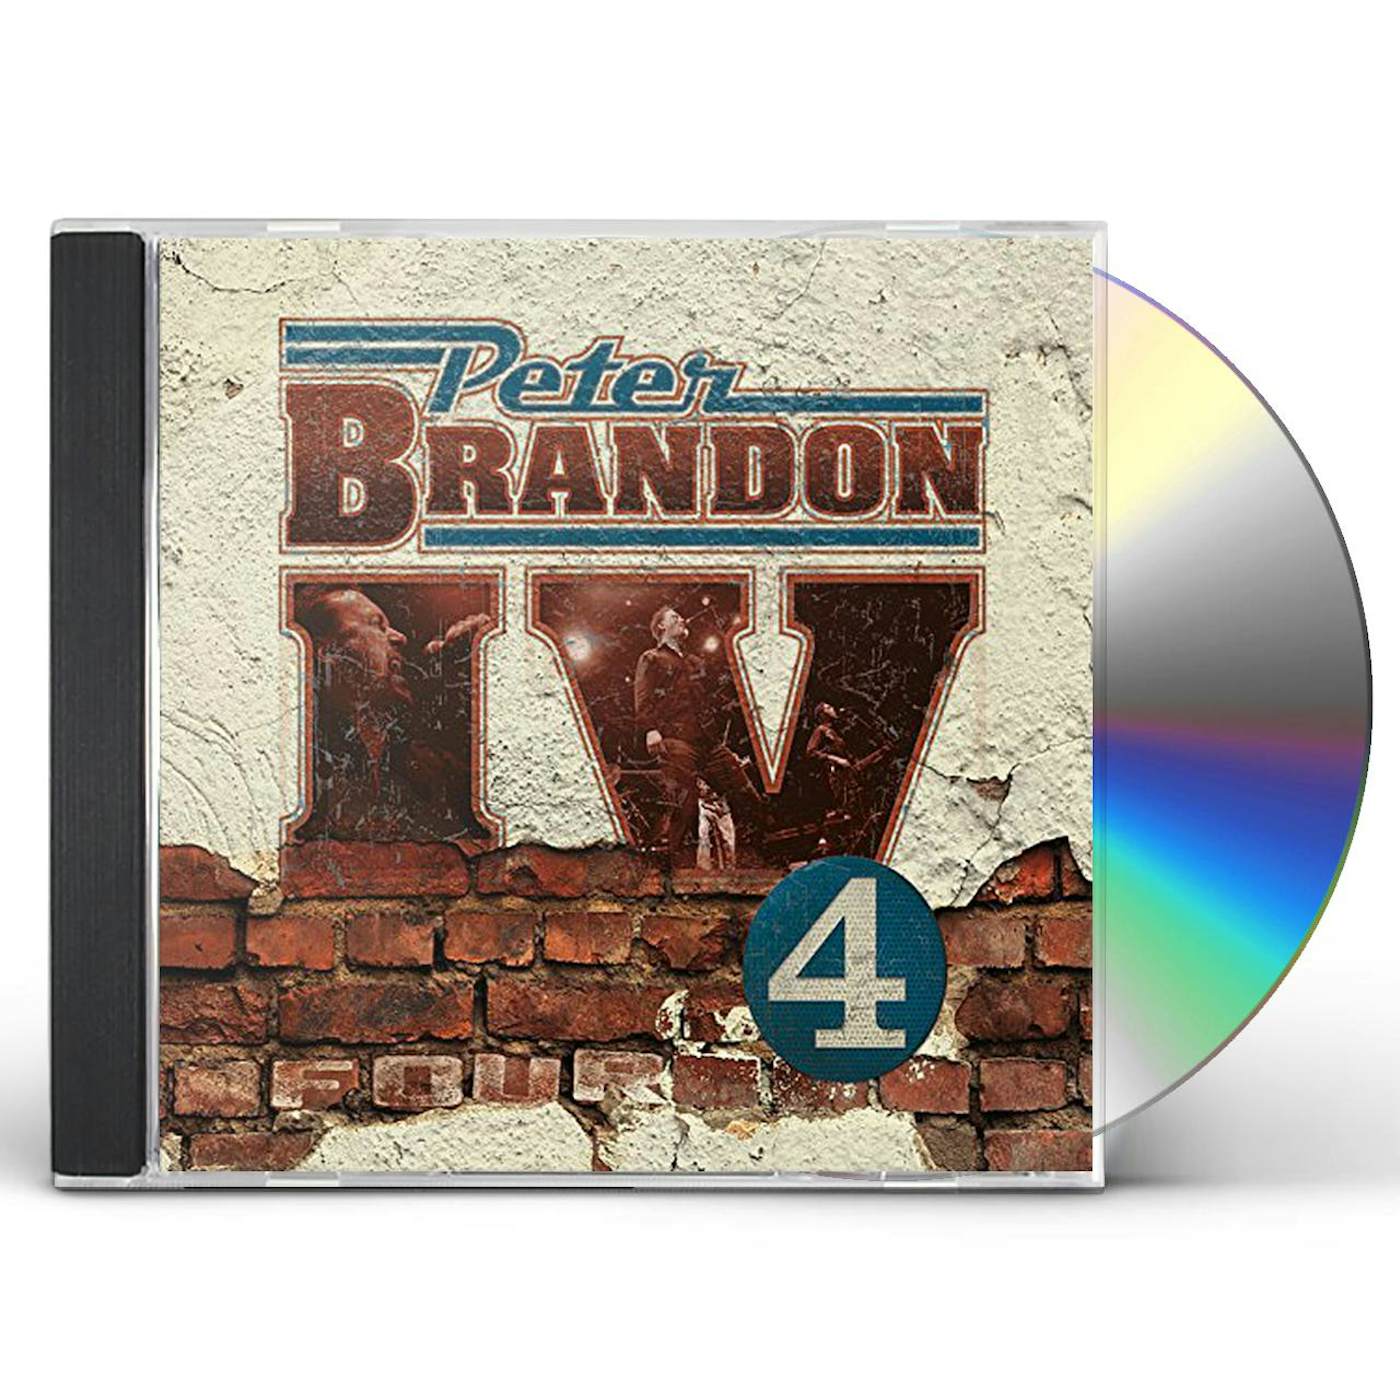 PETER BRANDON IV CD